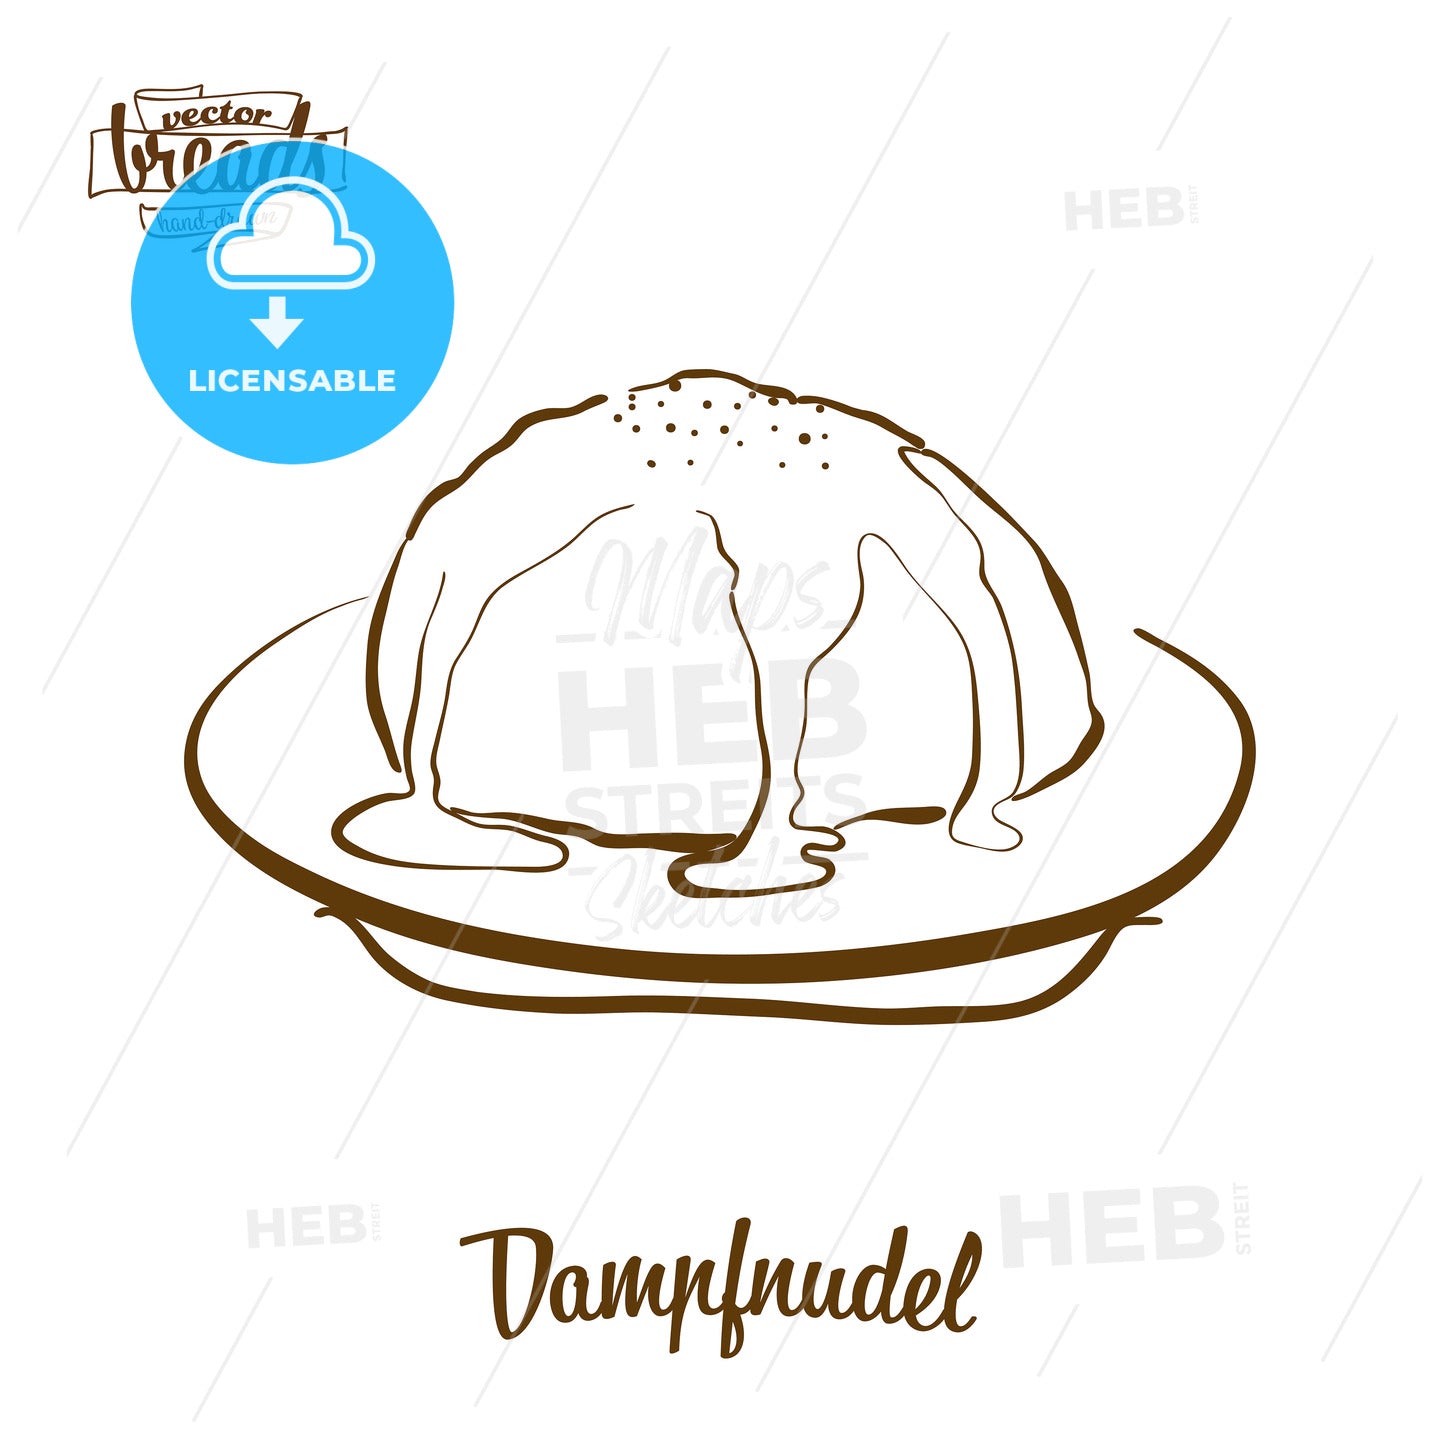 Dampfnudel bread vector drawing – instant download